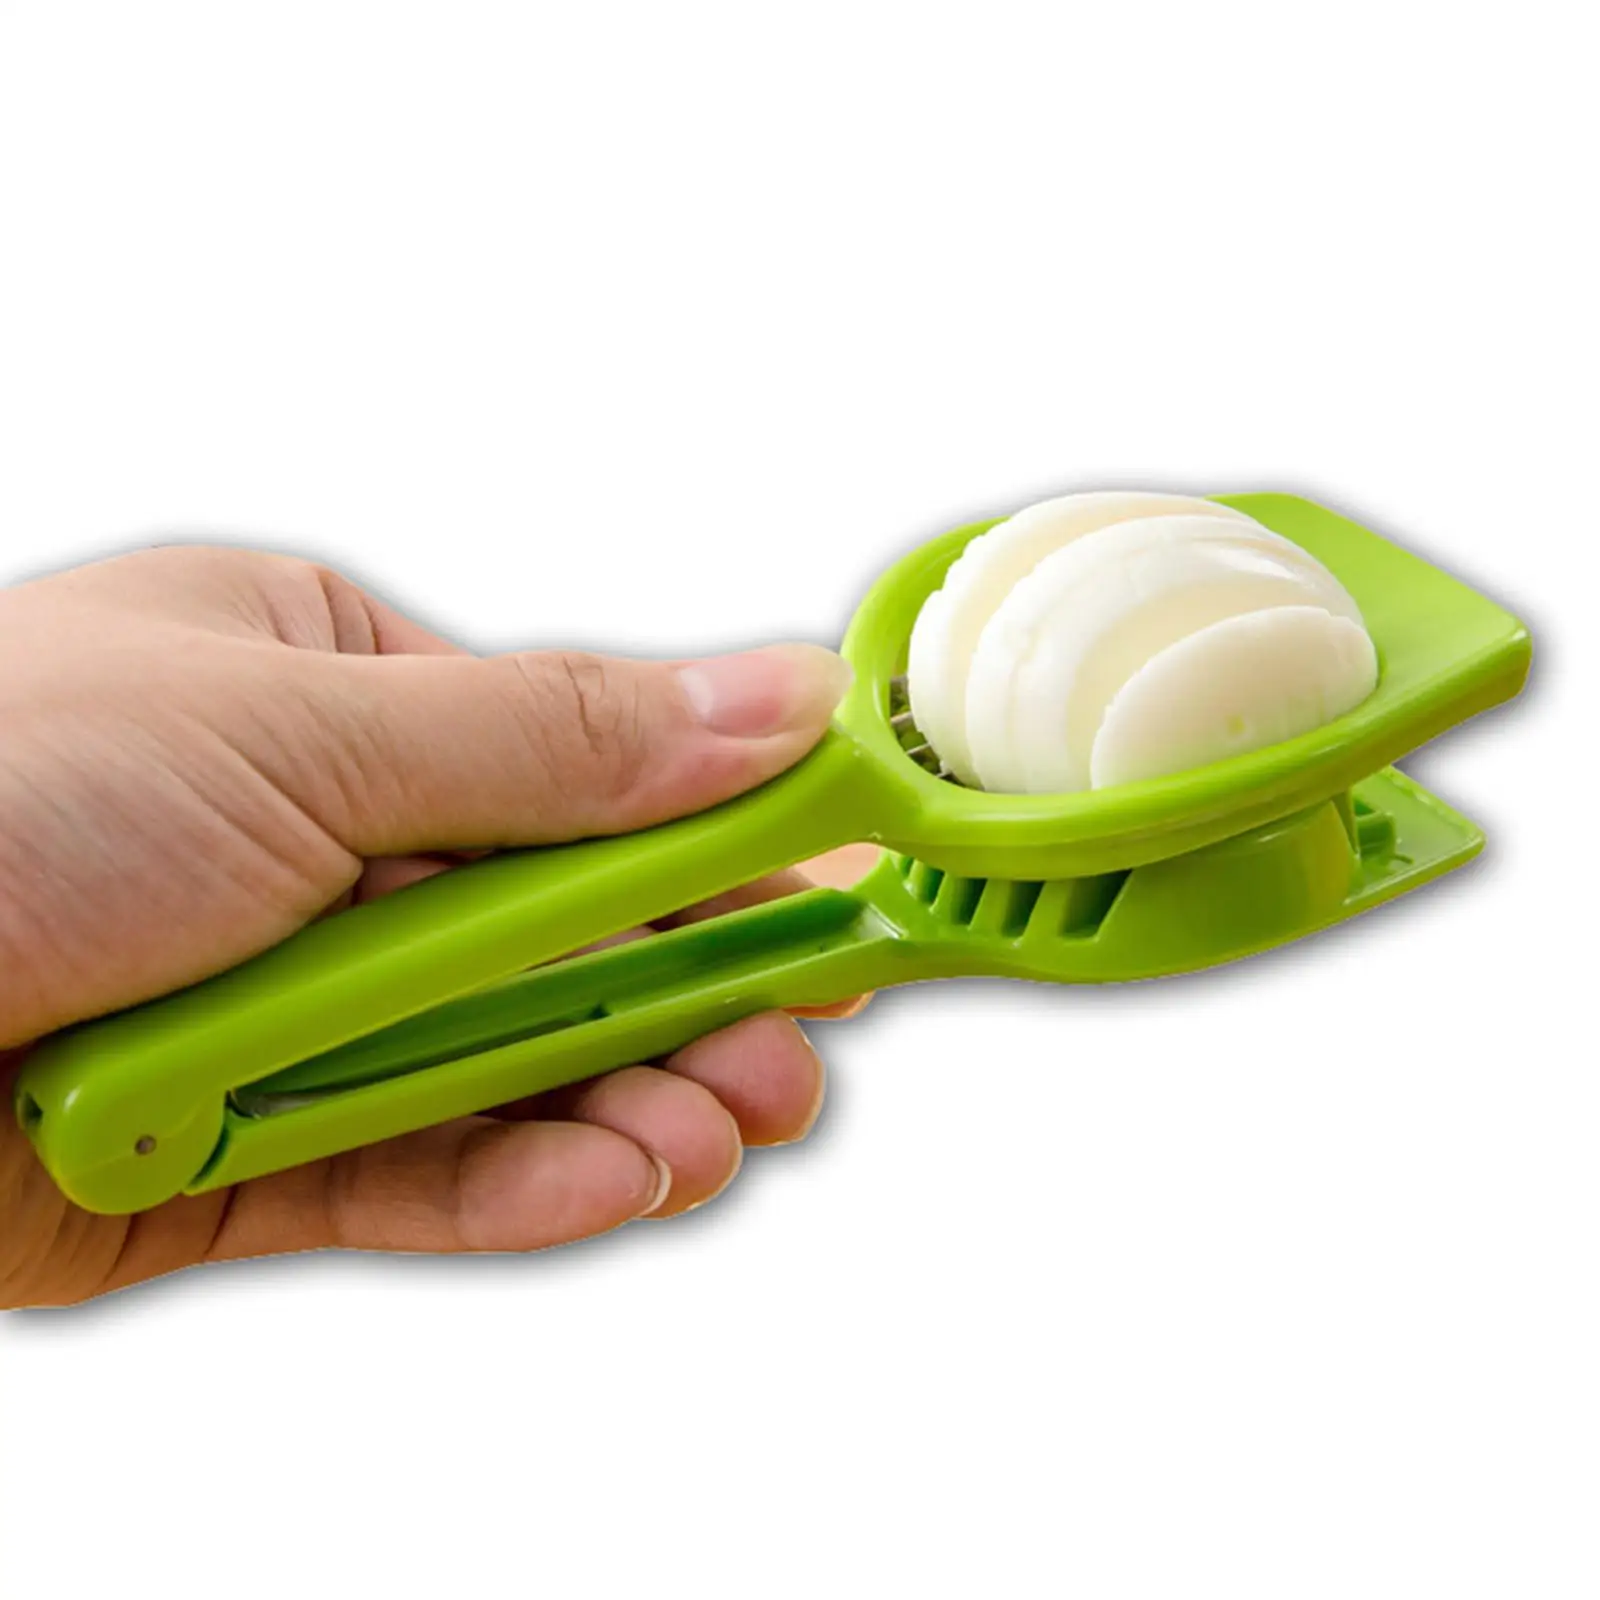 Egg Slicer Handheld Kitchen Gadgets Banana Strawberry Slicing Mushroom Cutter Fruit Separator for Dates Tomato Onions Meat